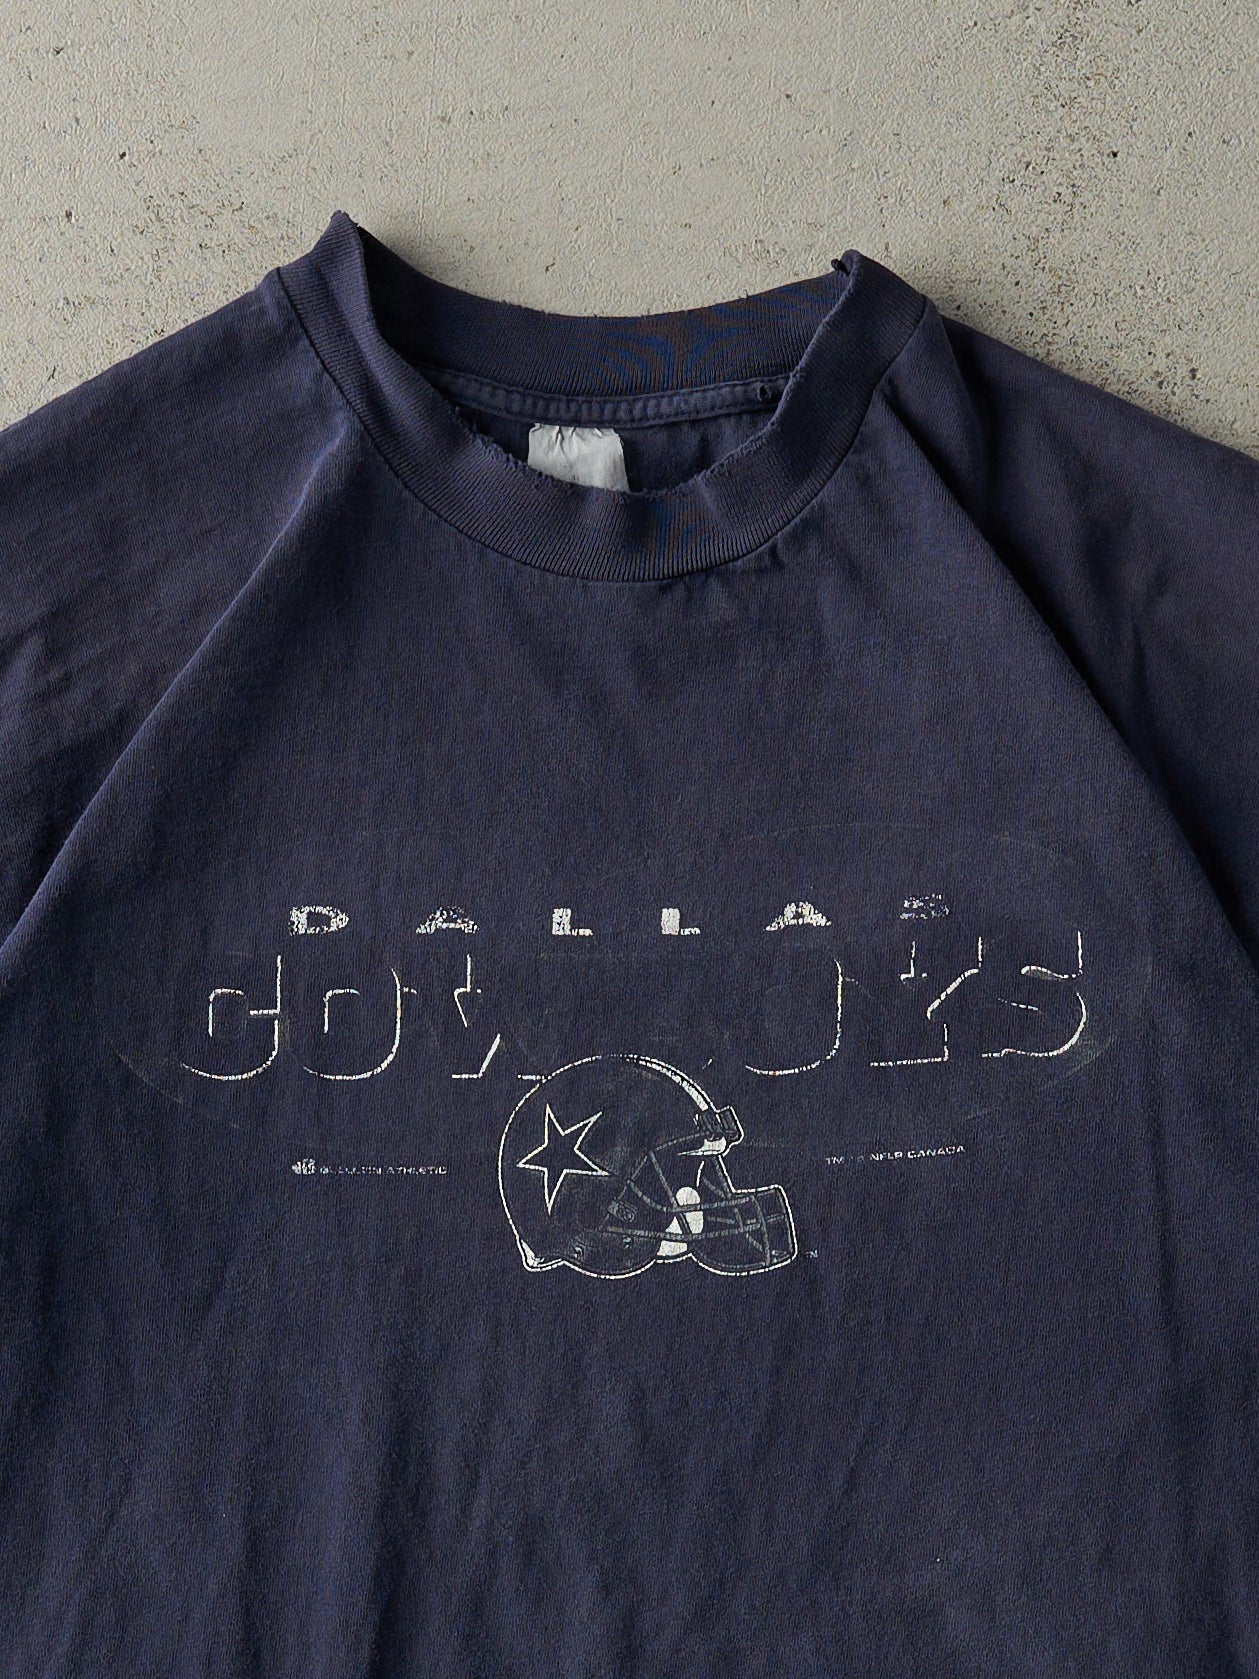 Vintage 90s Navy Blue Dallas Cowboys Single Stitch Tee (M)